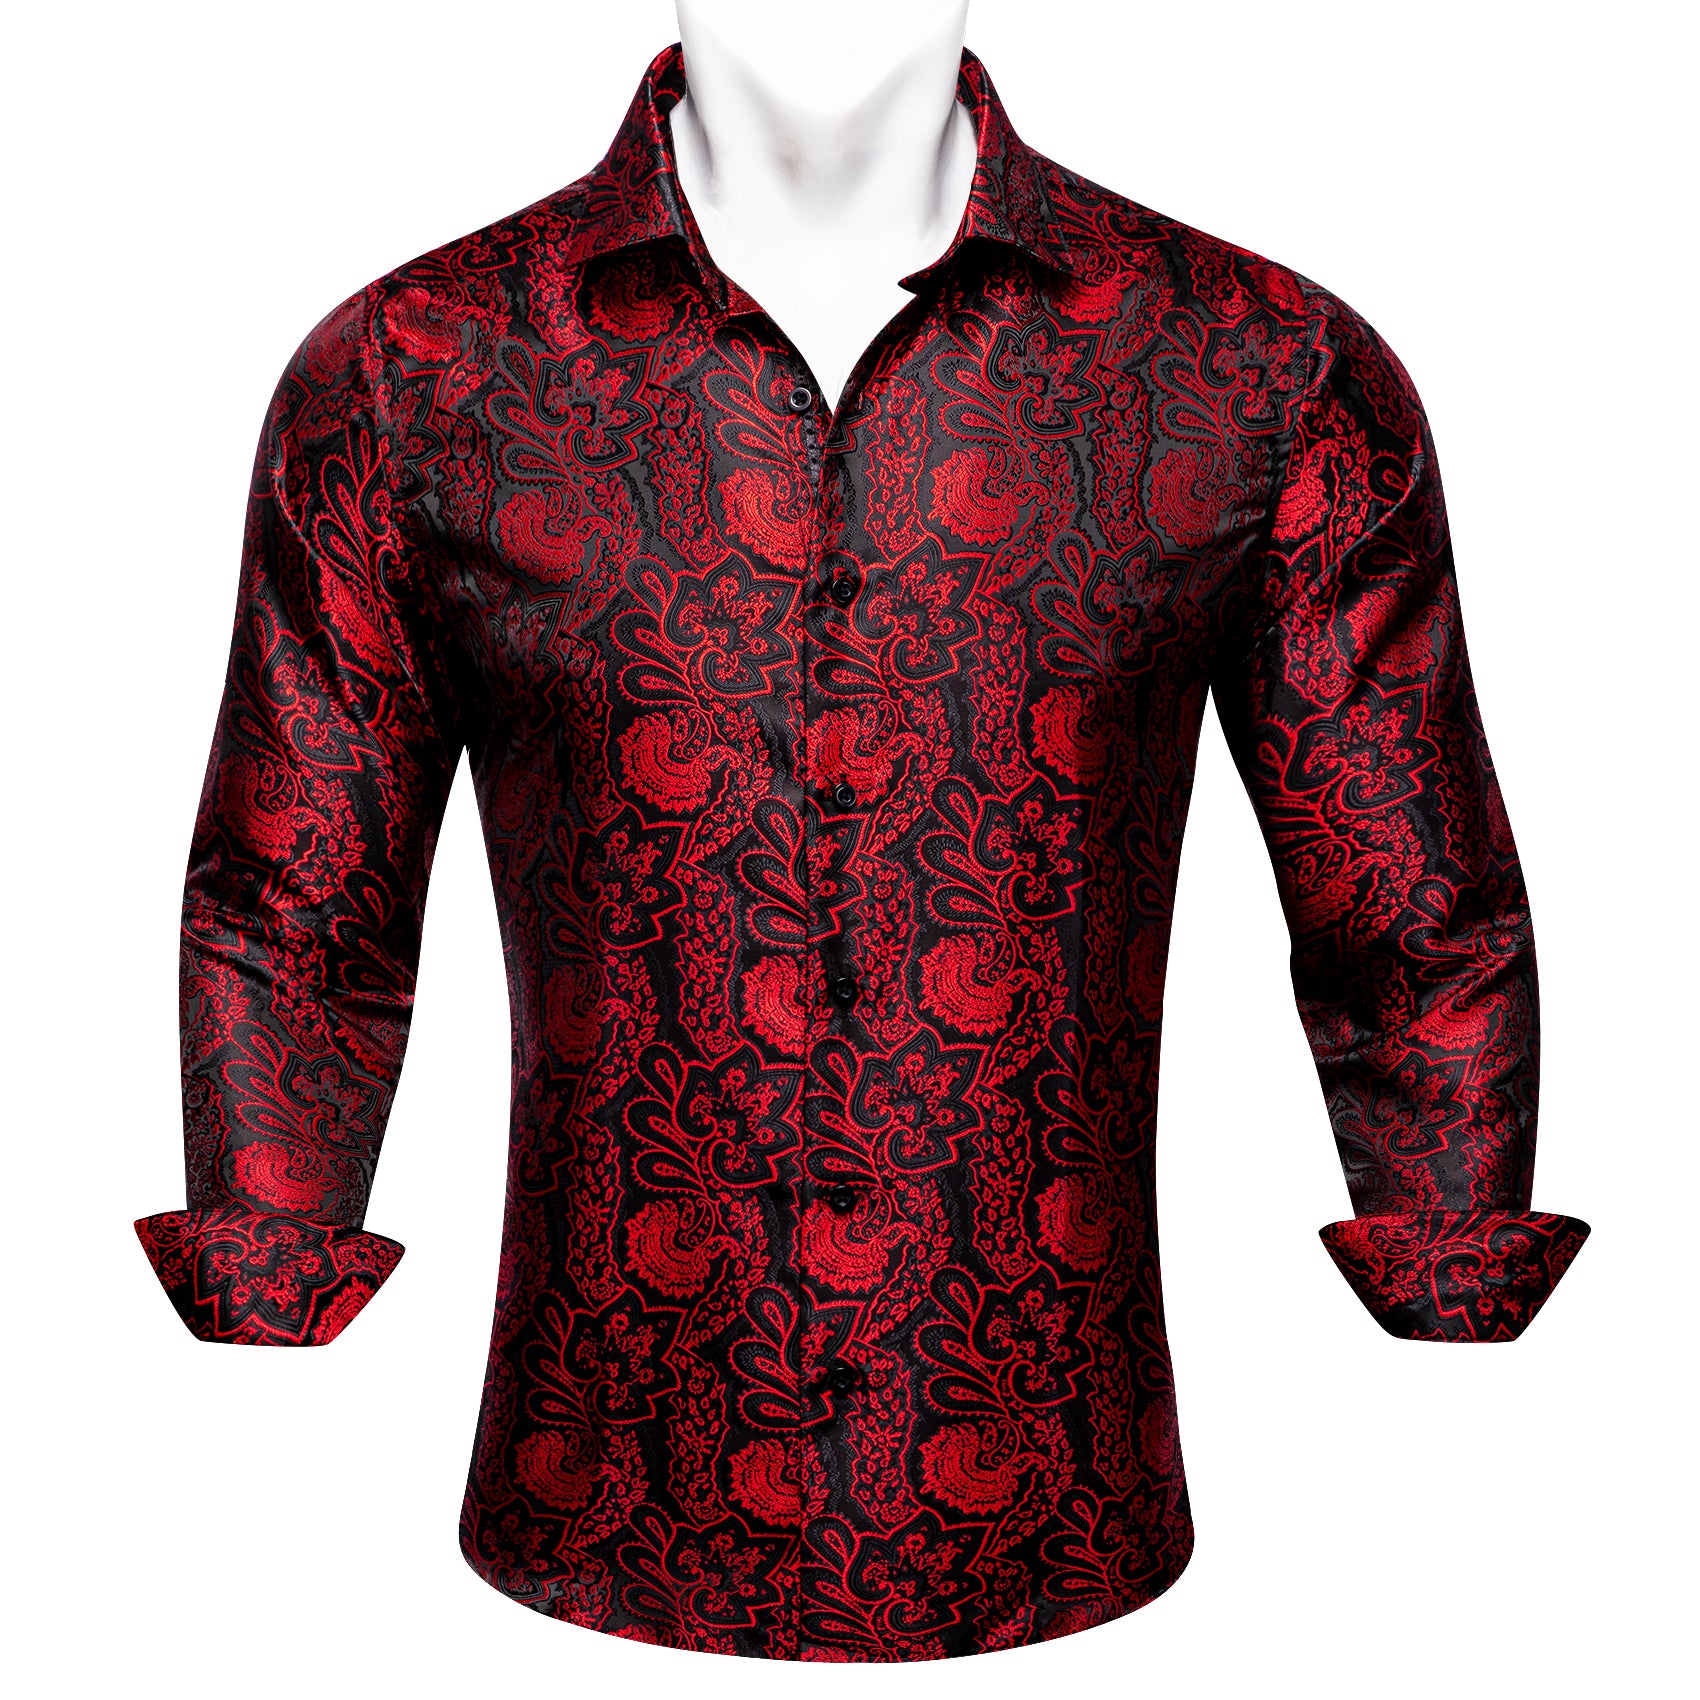 Barry.wang Black Red Paisley Men's Silk Shirt